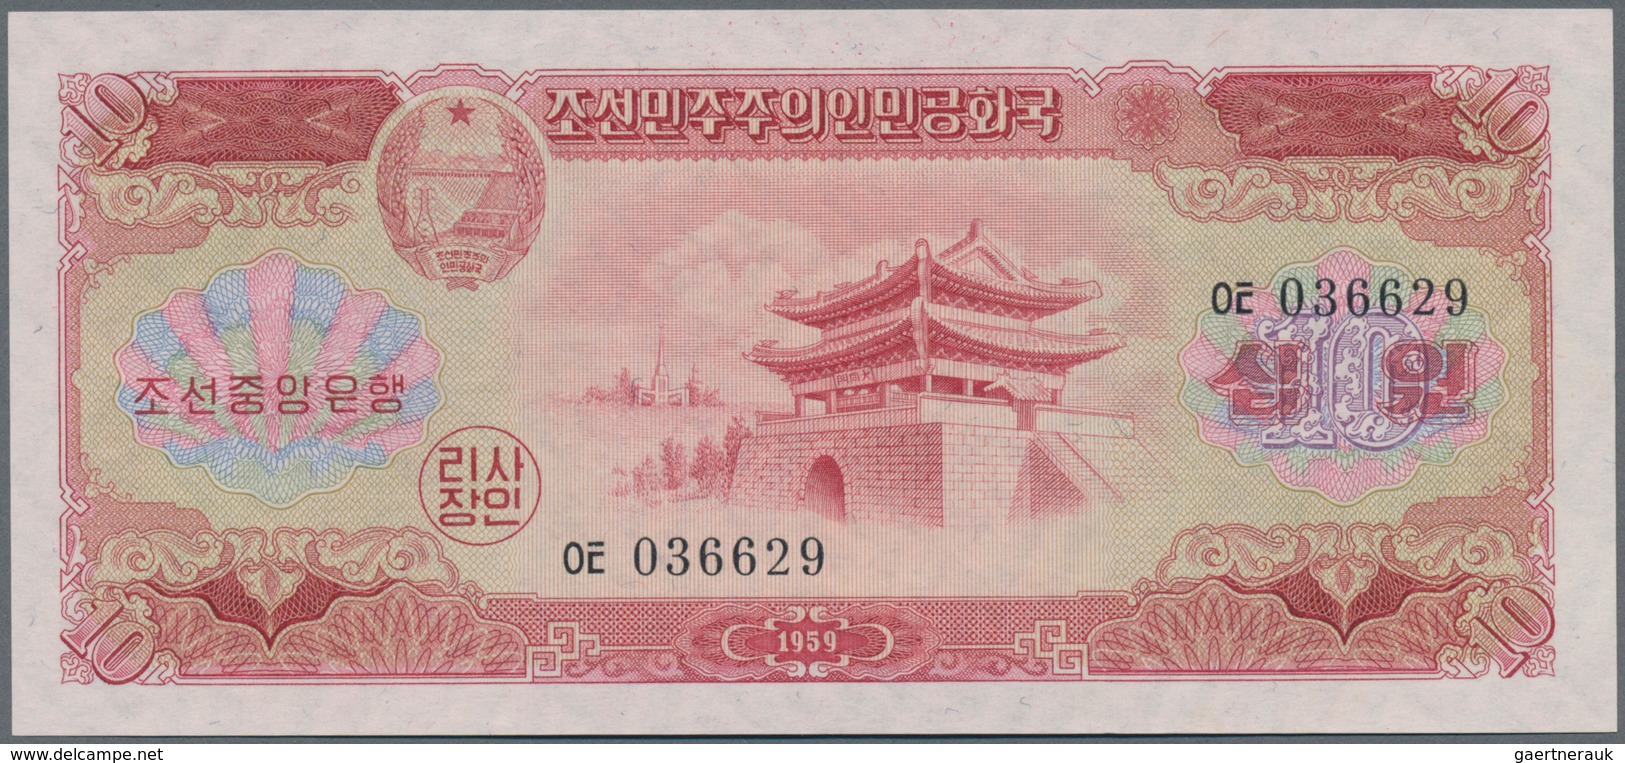 North Korea / Banknoten: Central Bank of the Democratic Peoples Republic of Korea, set with 6 bankno